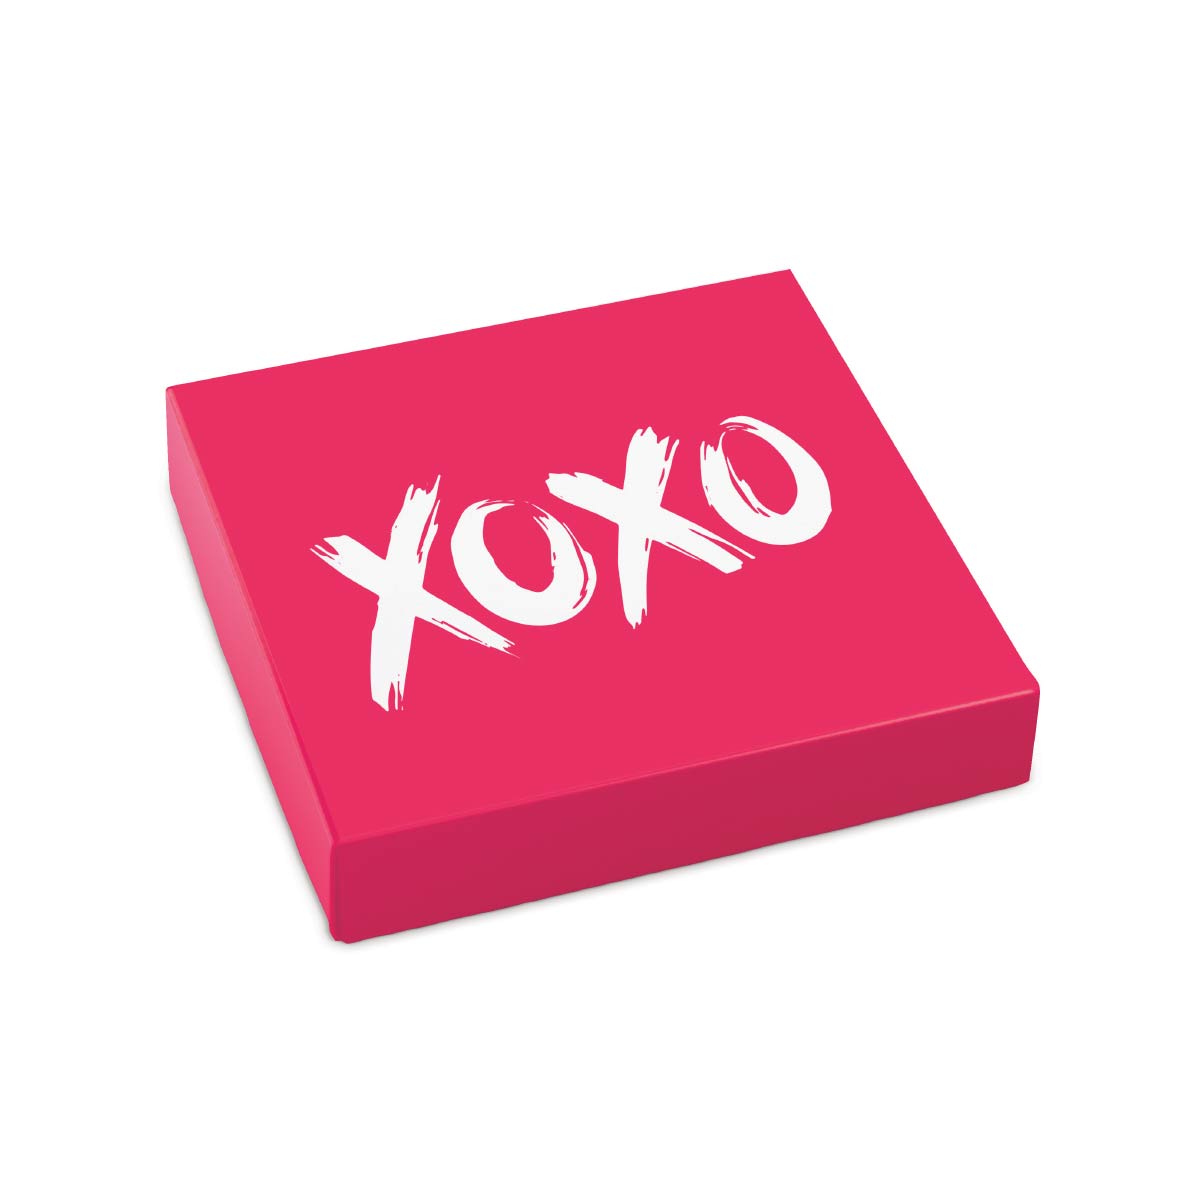 XOXO Valentine's Day Gift Box with Assorted Sugar Free Chocolate